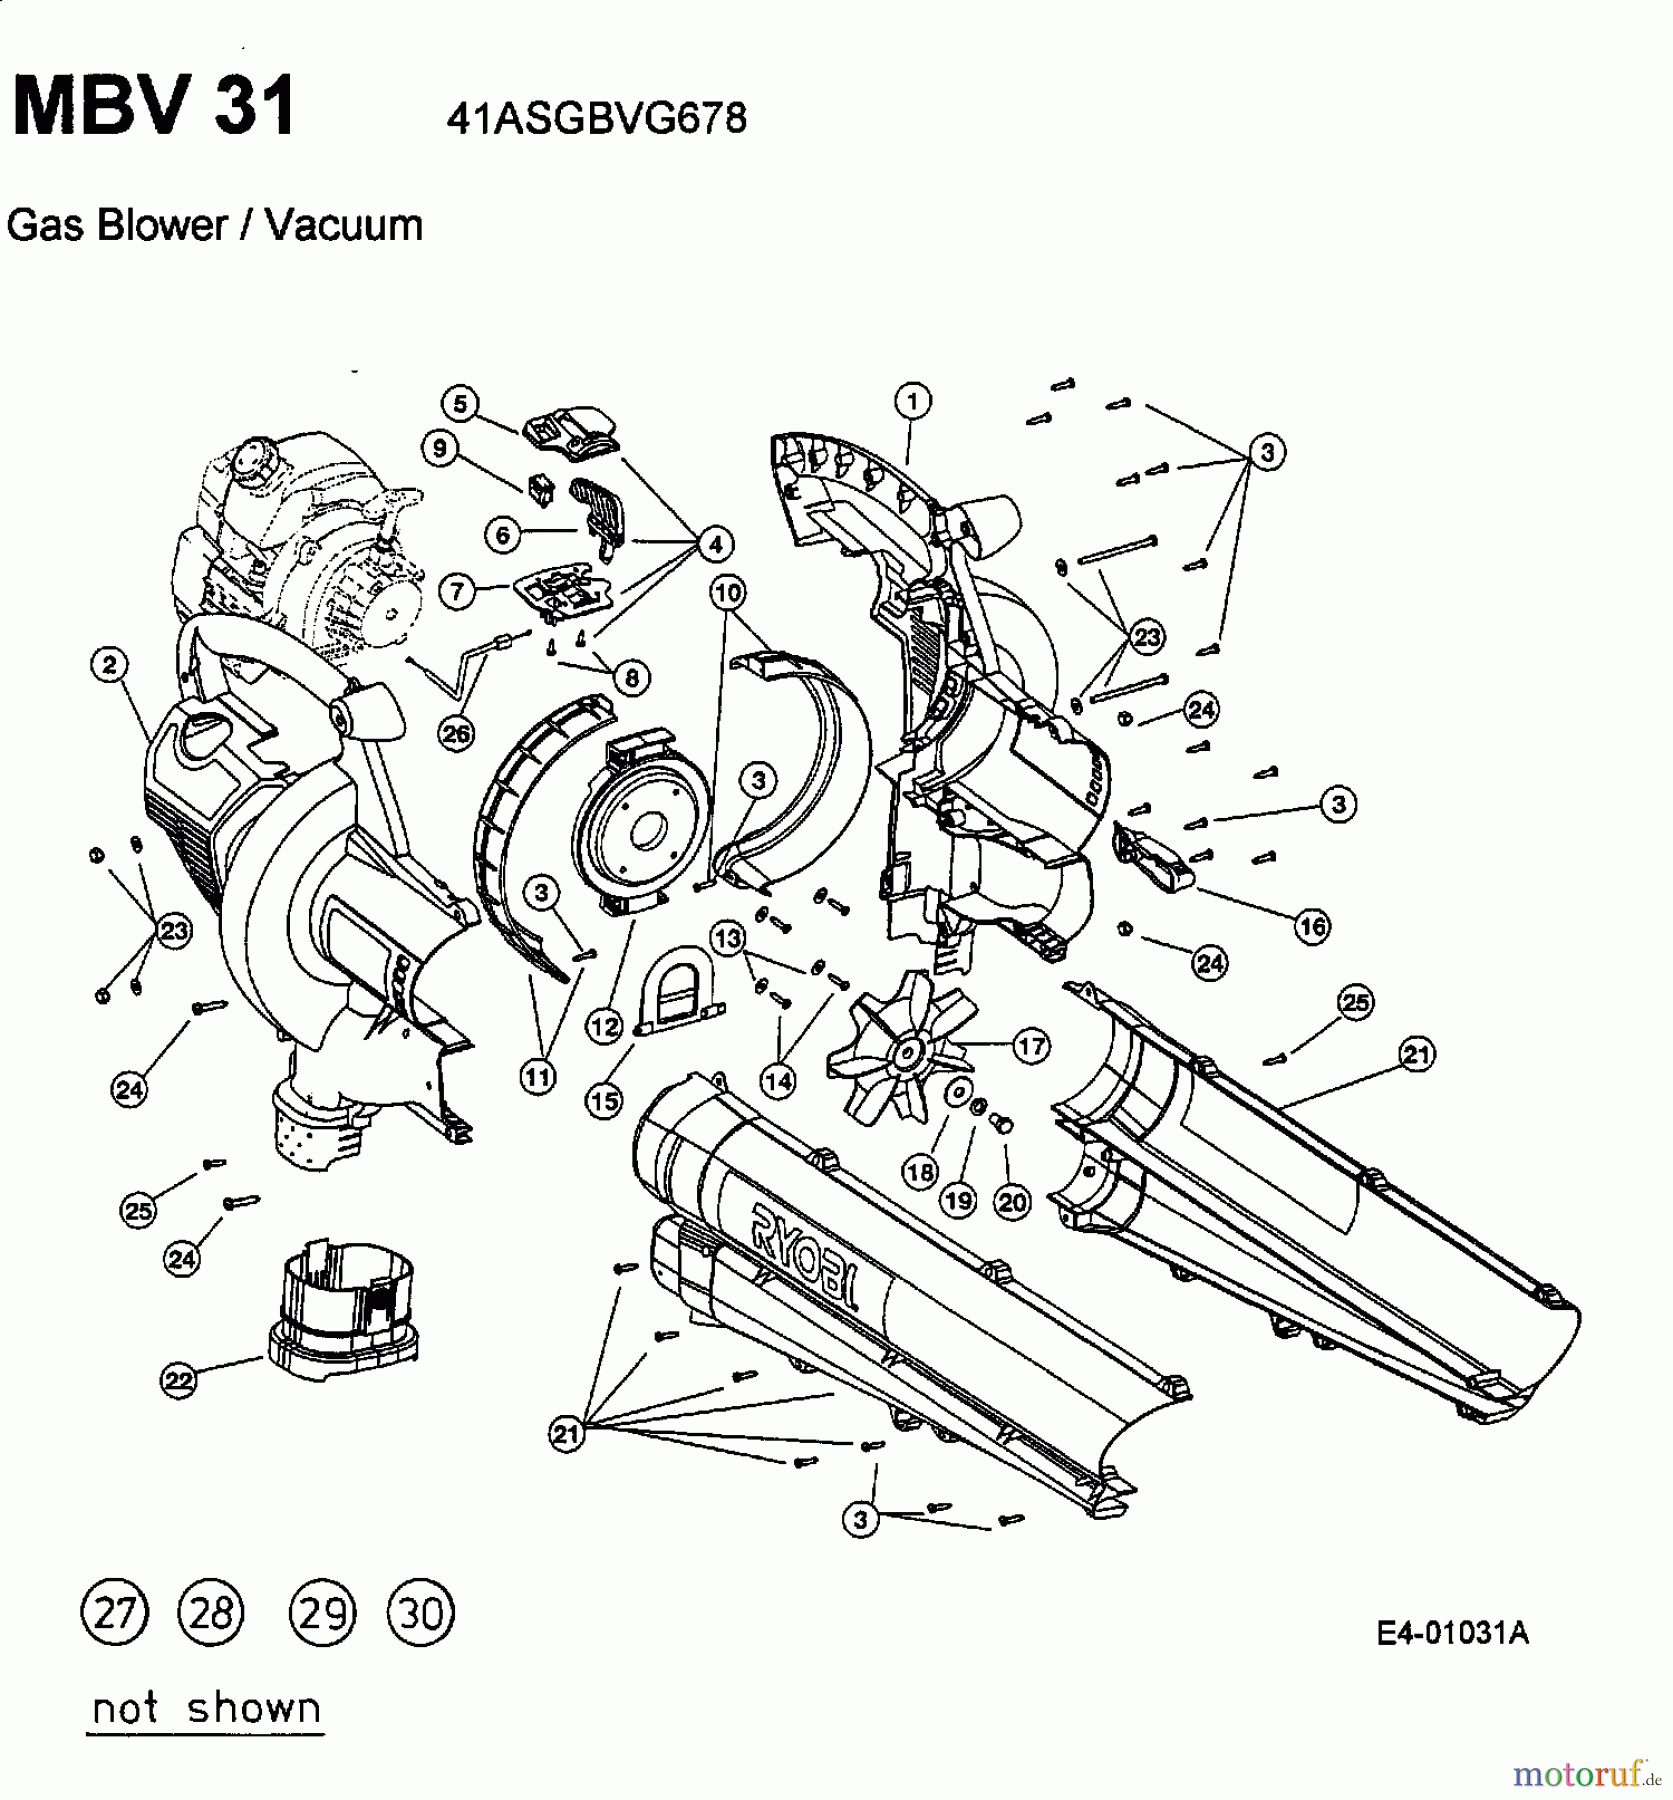  MTD Leaf blower, Blower vac MBV 31 41ASGBVG678  (2002) Basic machine